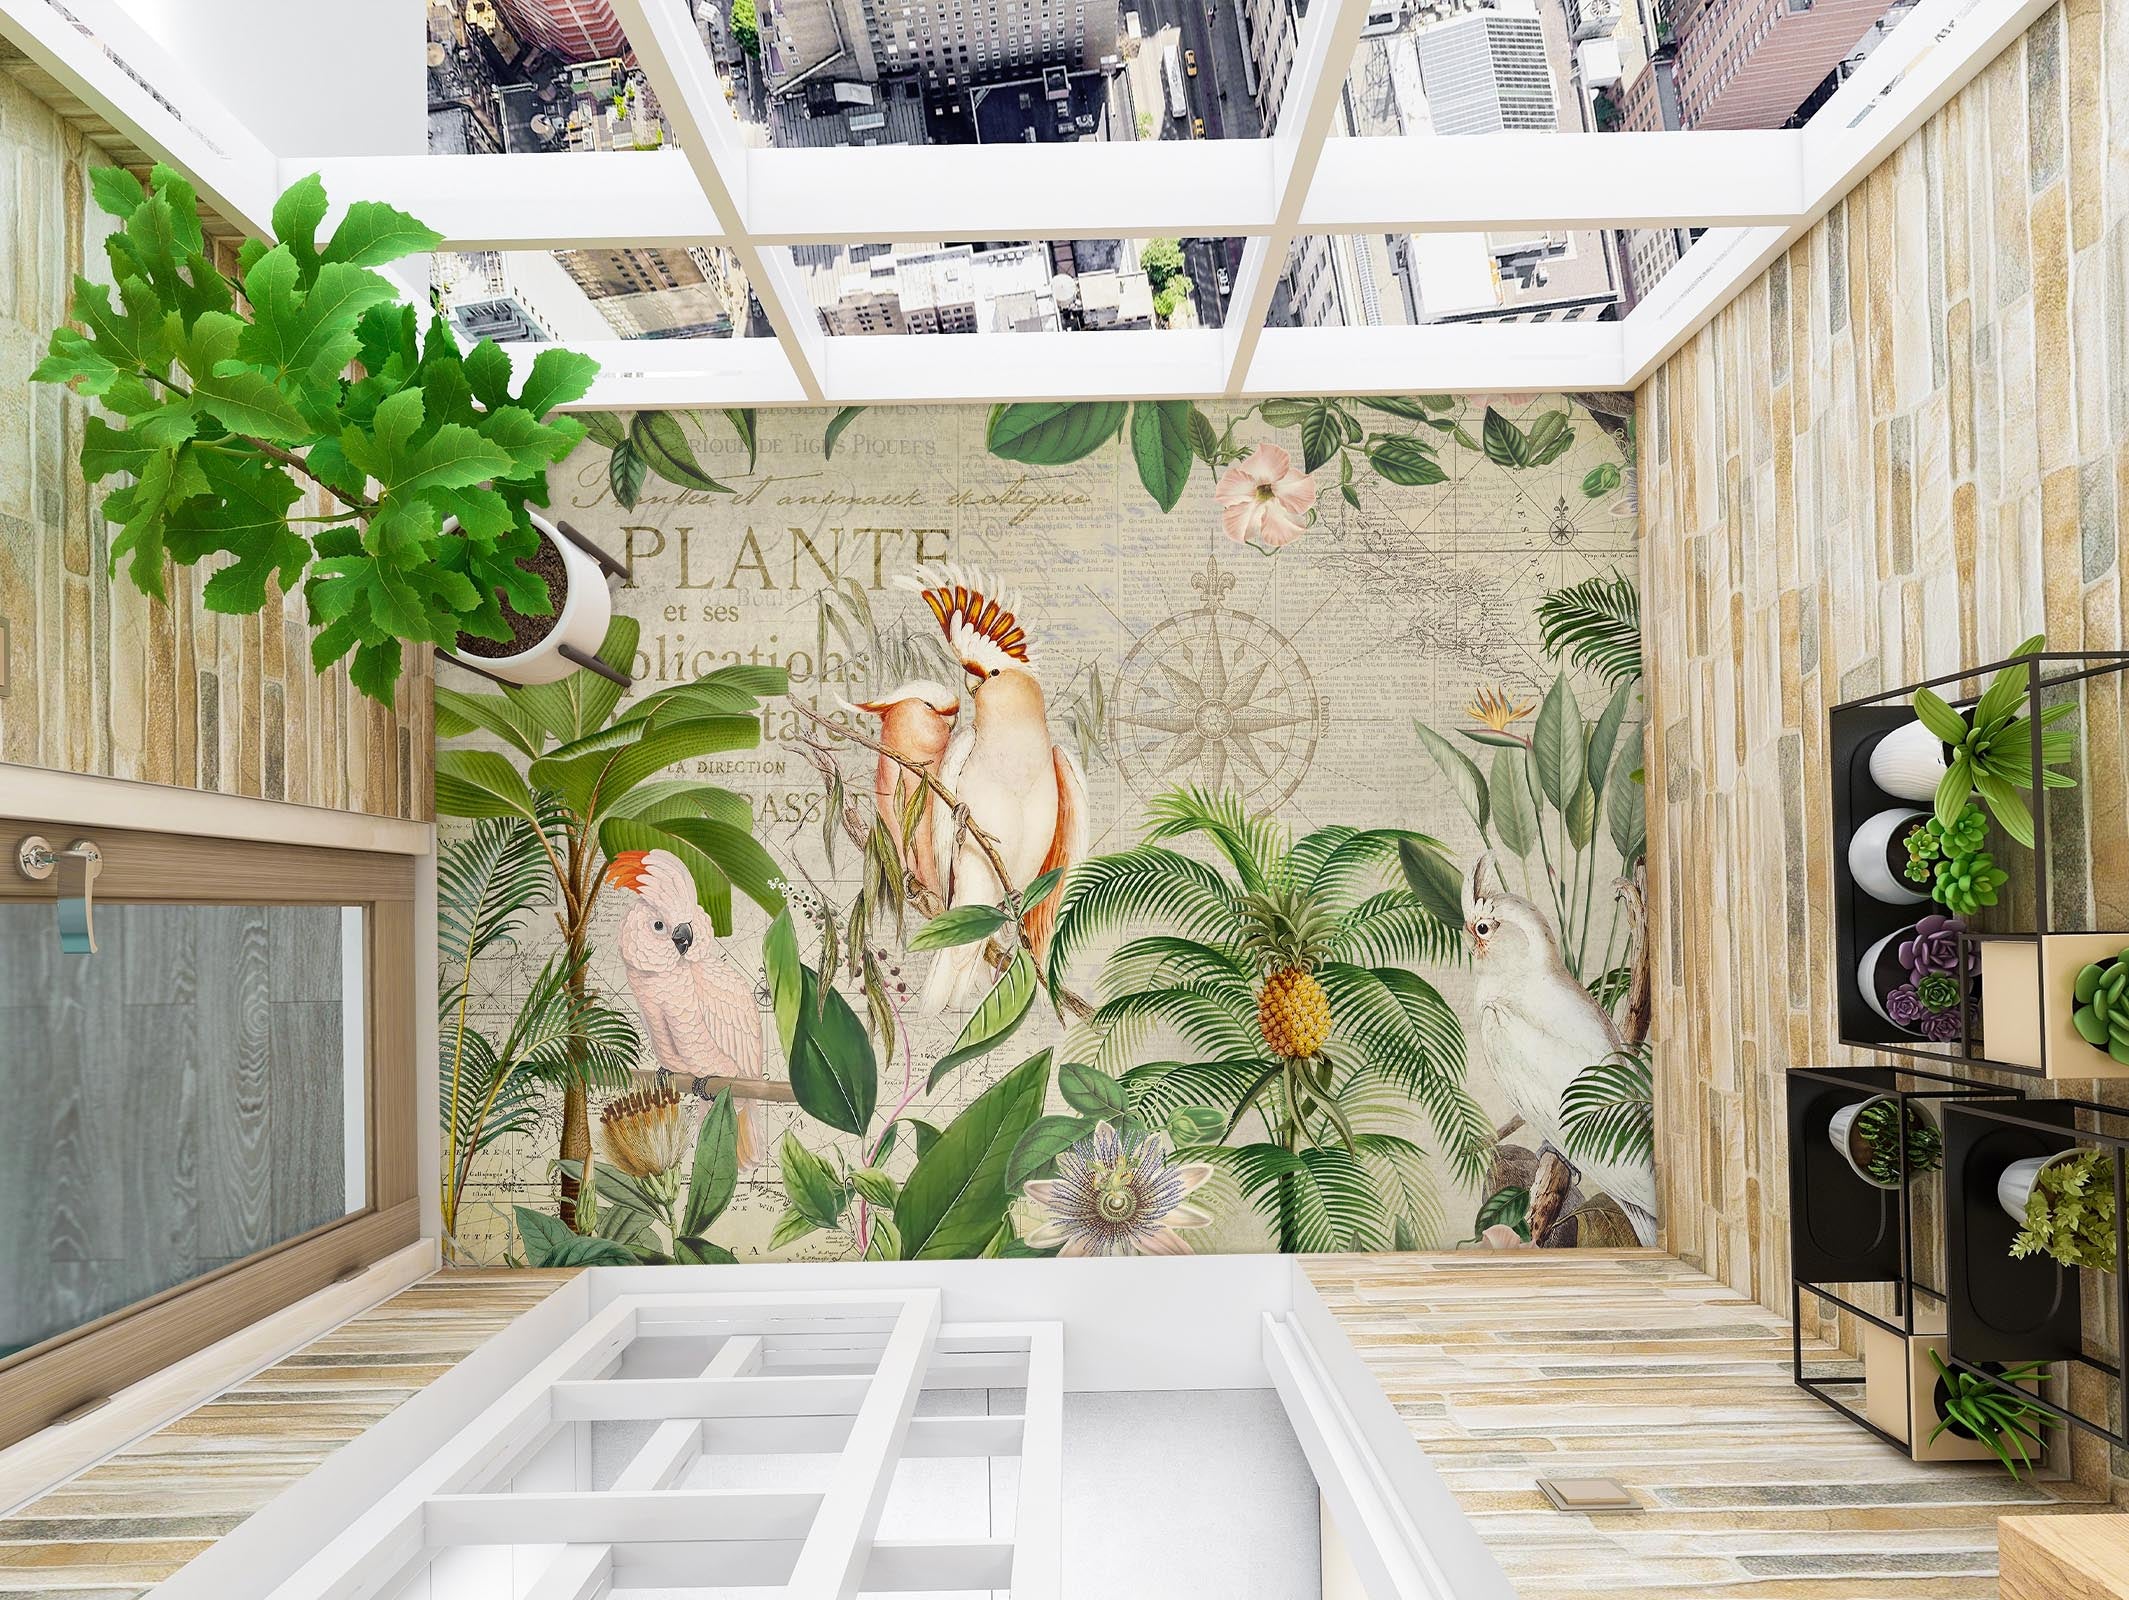 3D Jungle Parrot Pineapple 104173 Andrea Haase Floor Mural  Wallpaper Murals Self-Adhesive Removable Print Epoxy